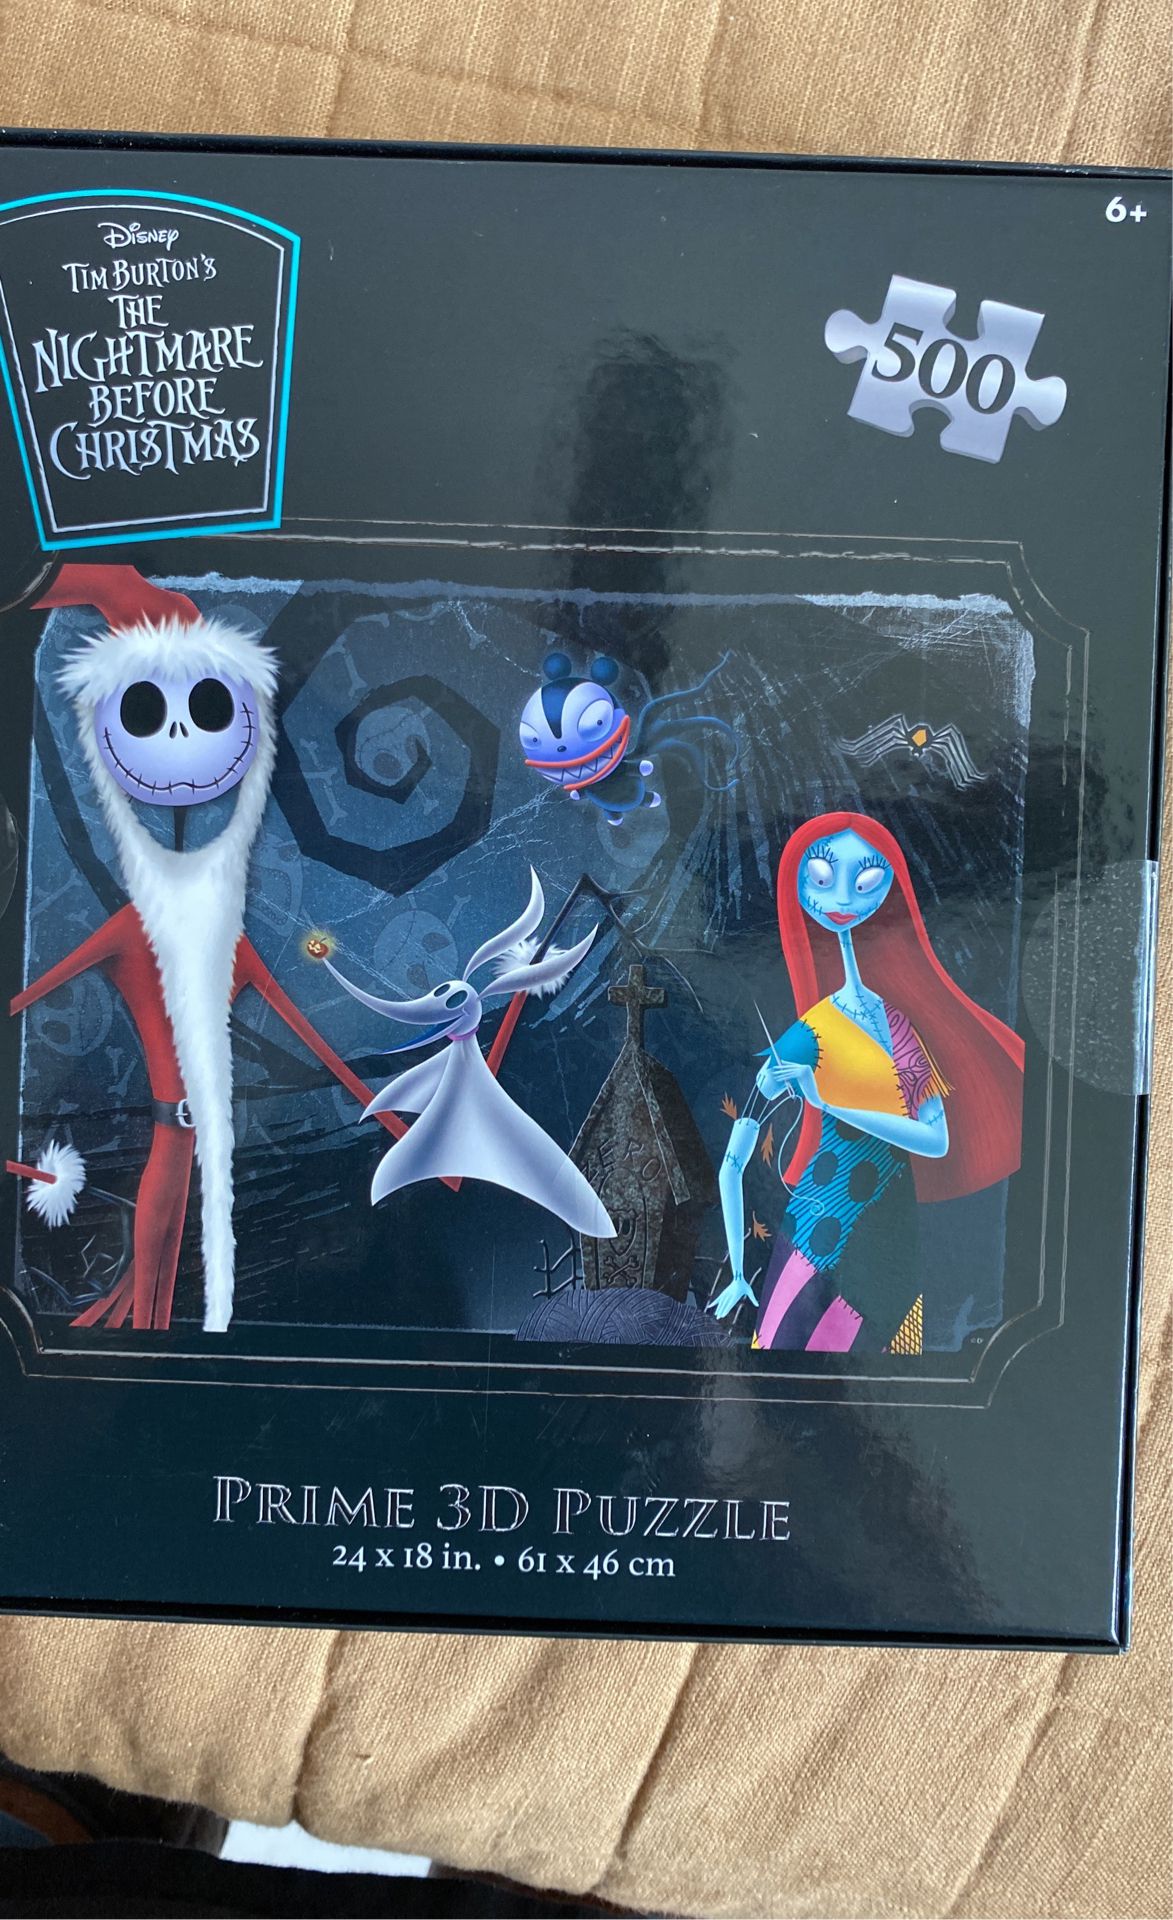 Prime 3D Puzzle Disney's Tim Burton's The Nightmare Before Christmas 500pc